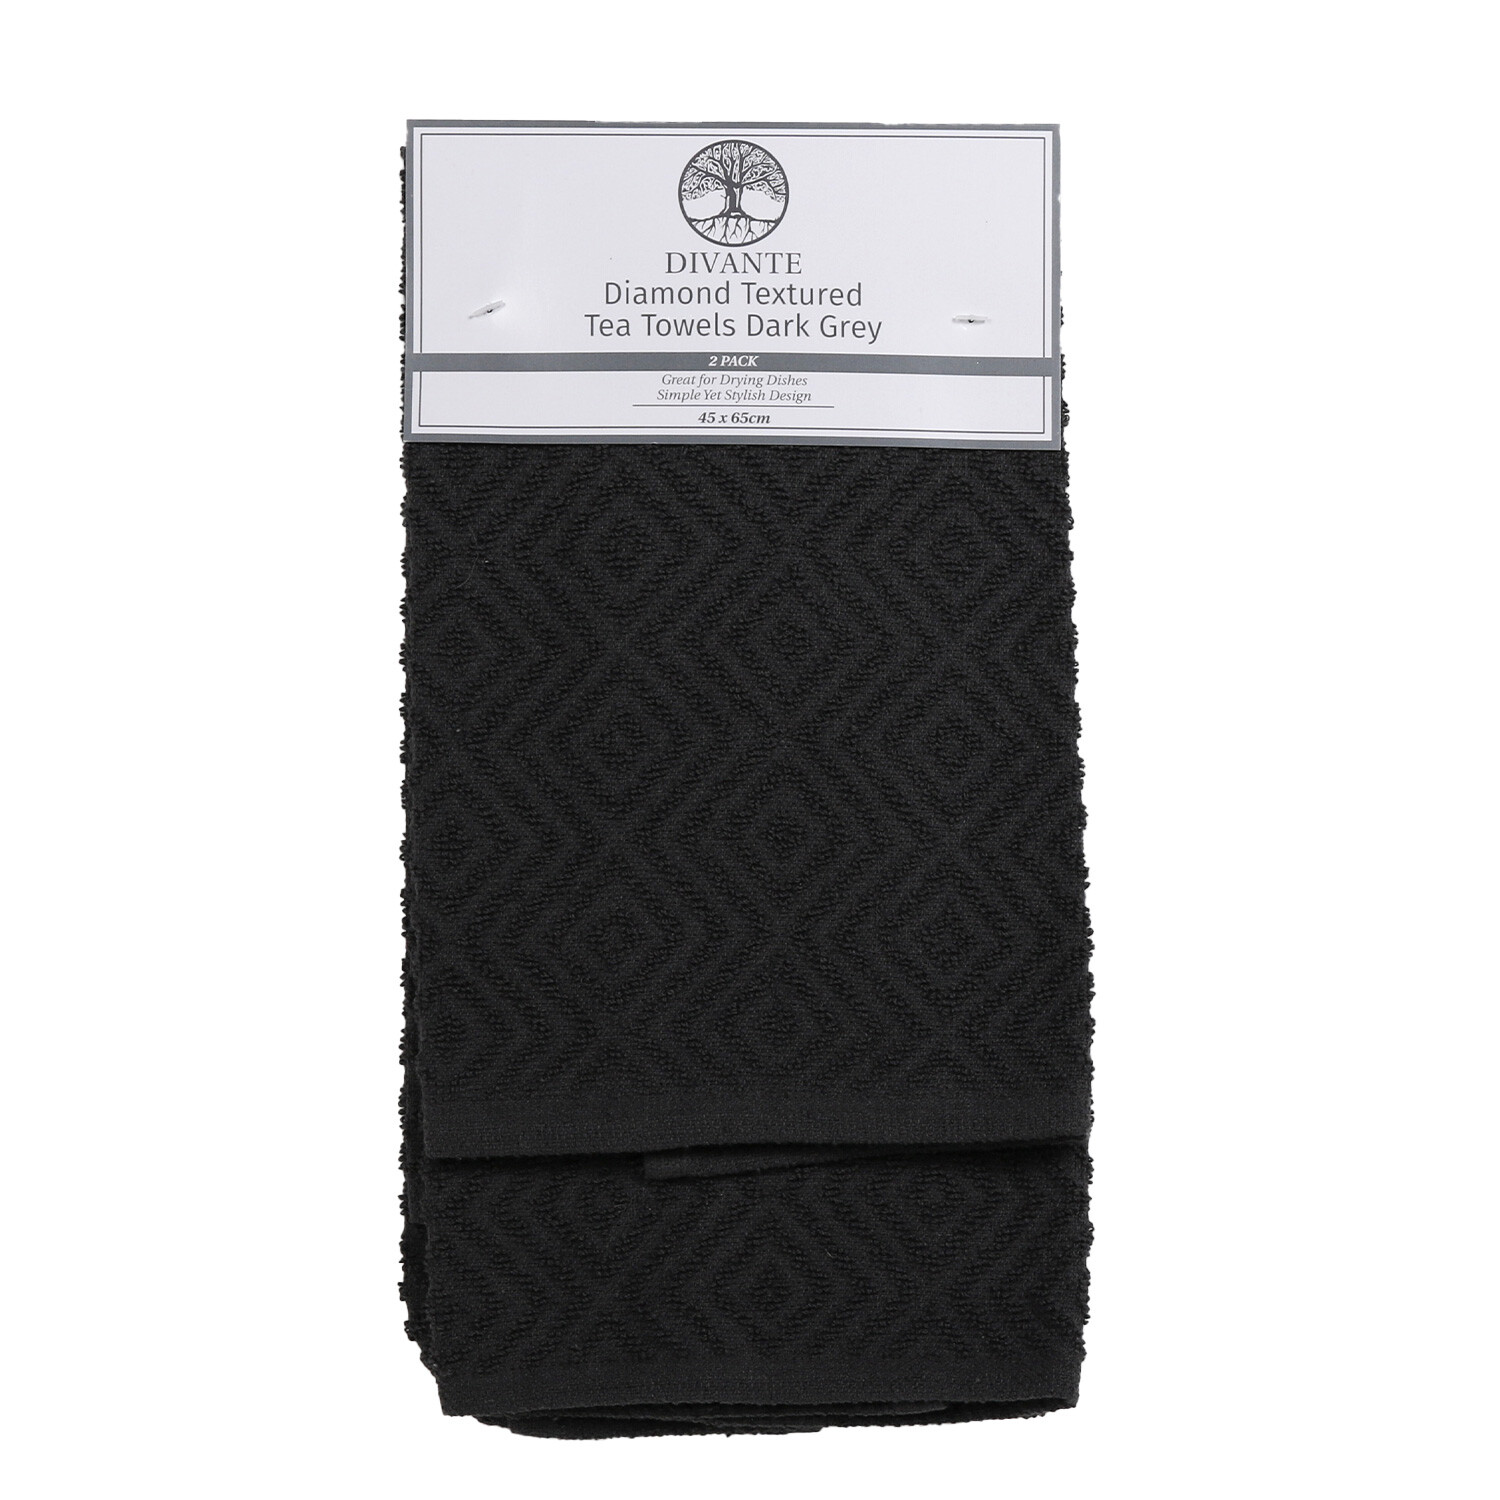 Pack of 2 Diamond Textured Tea Towel - Dark Grey Image